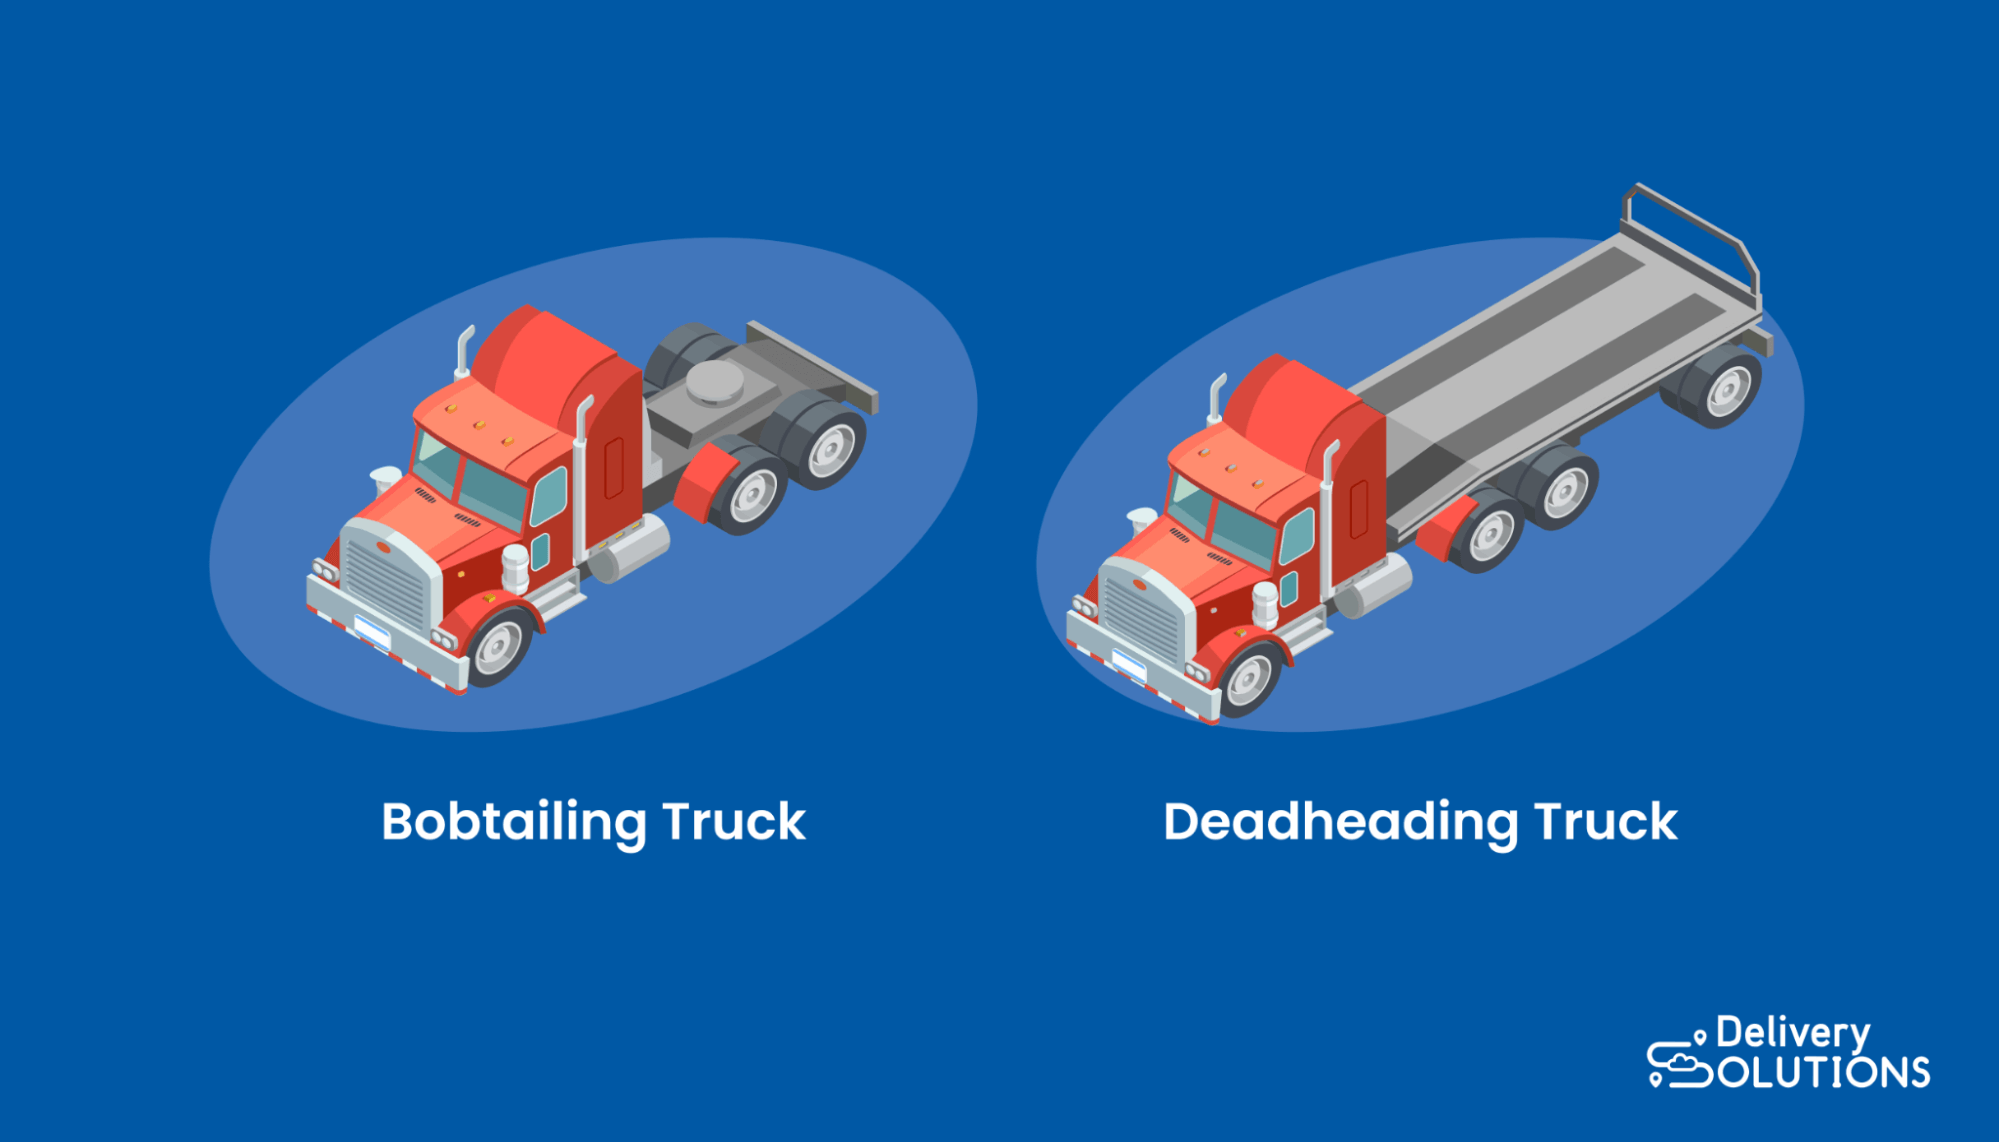 Deadheading truck and bobtailing truck